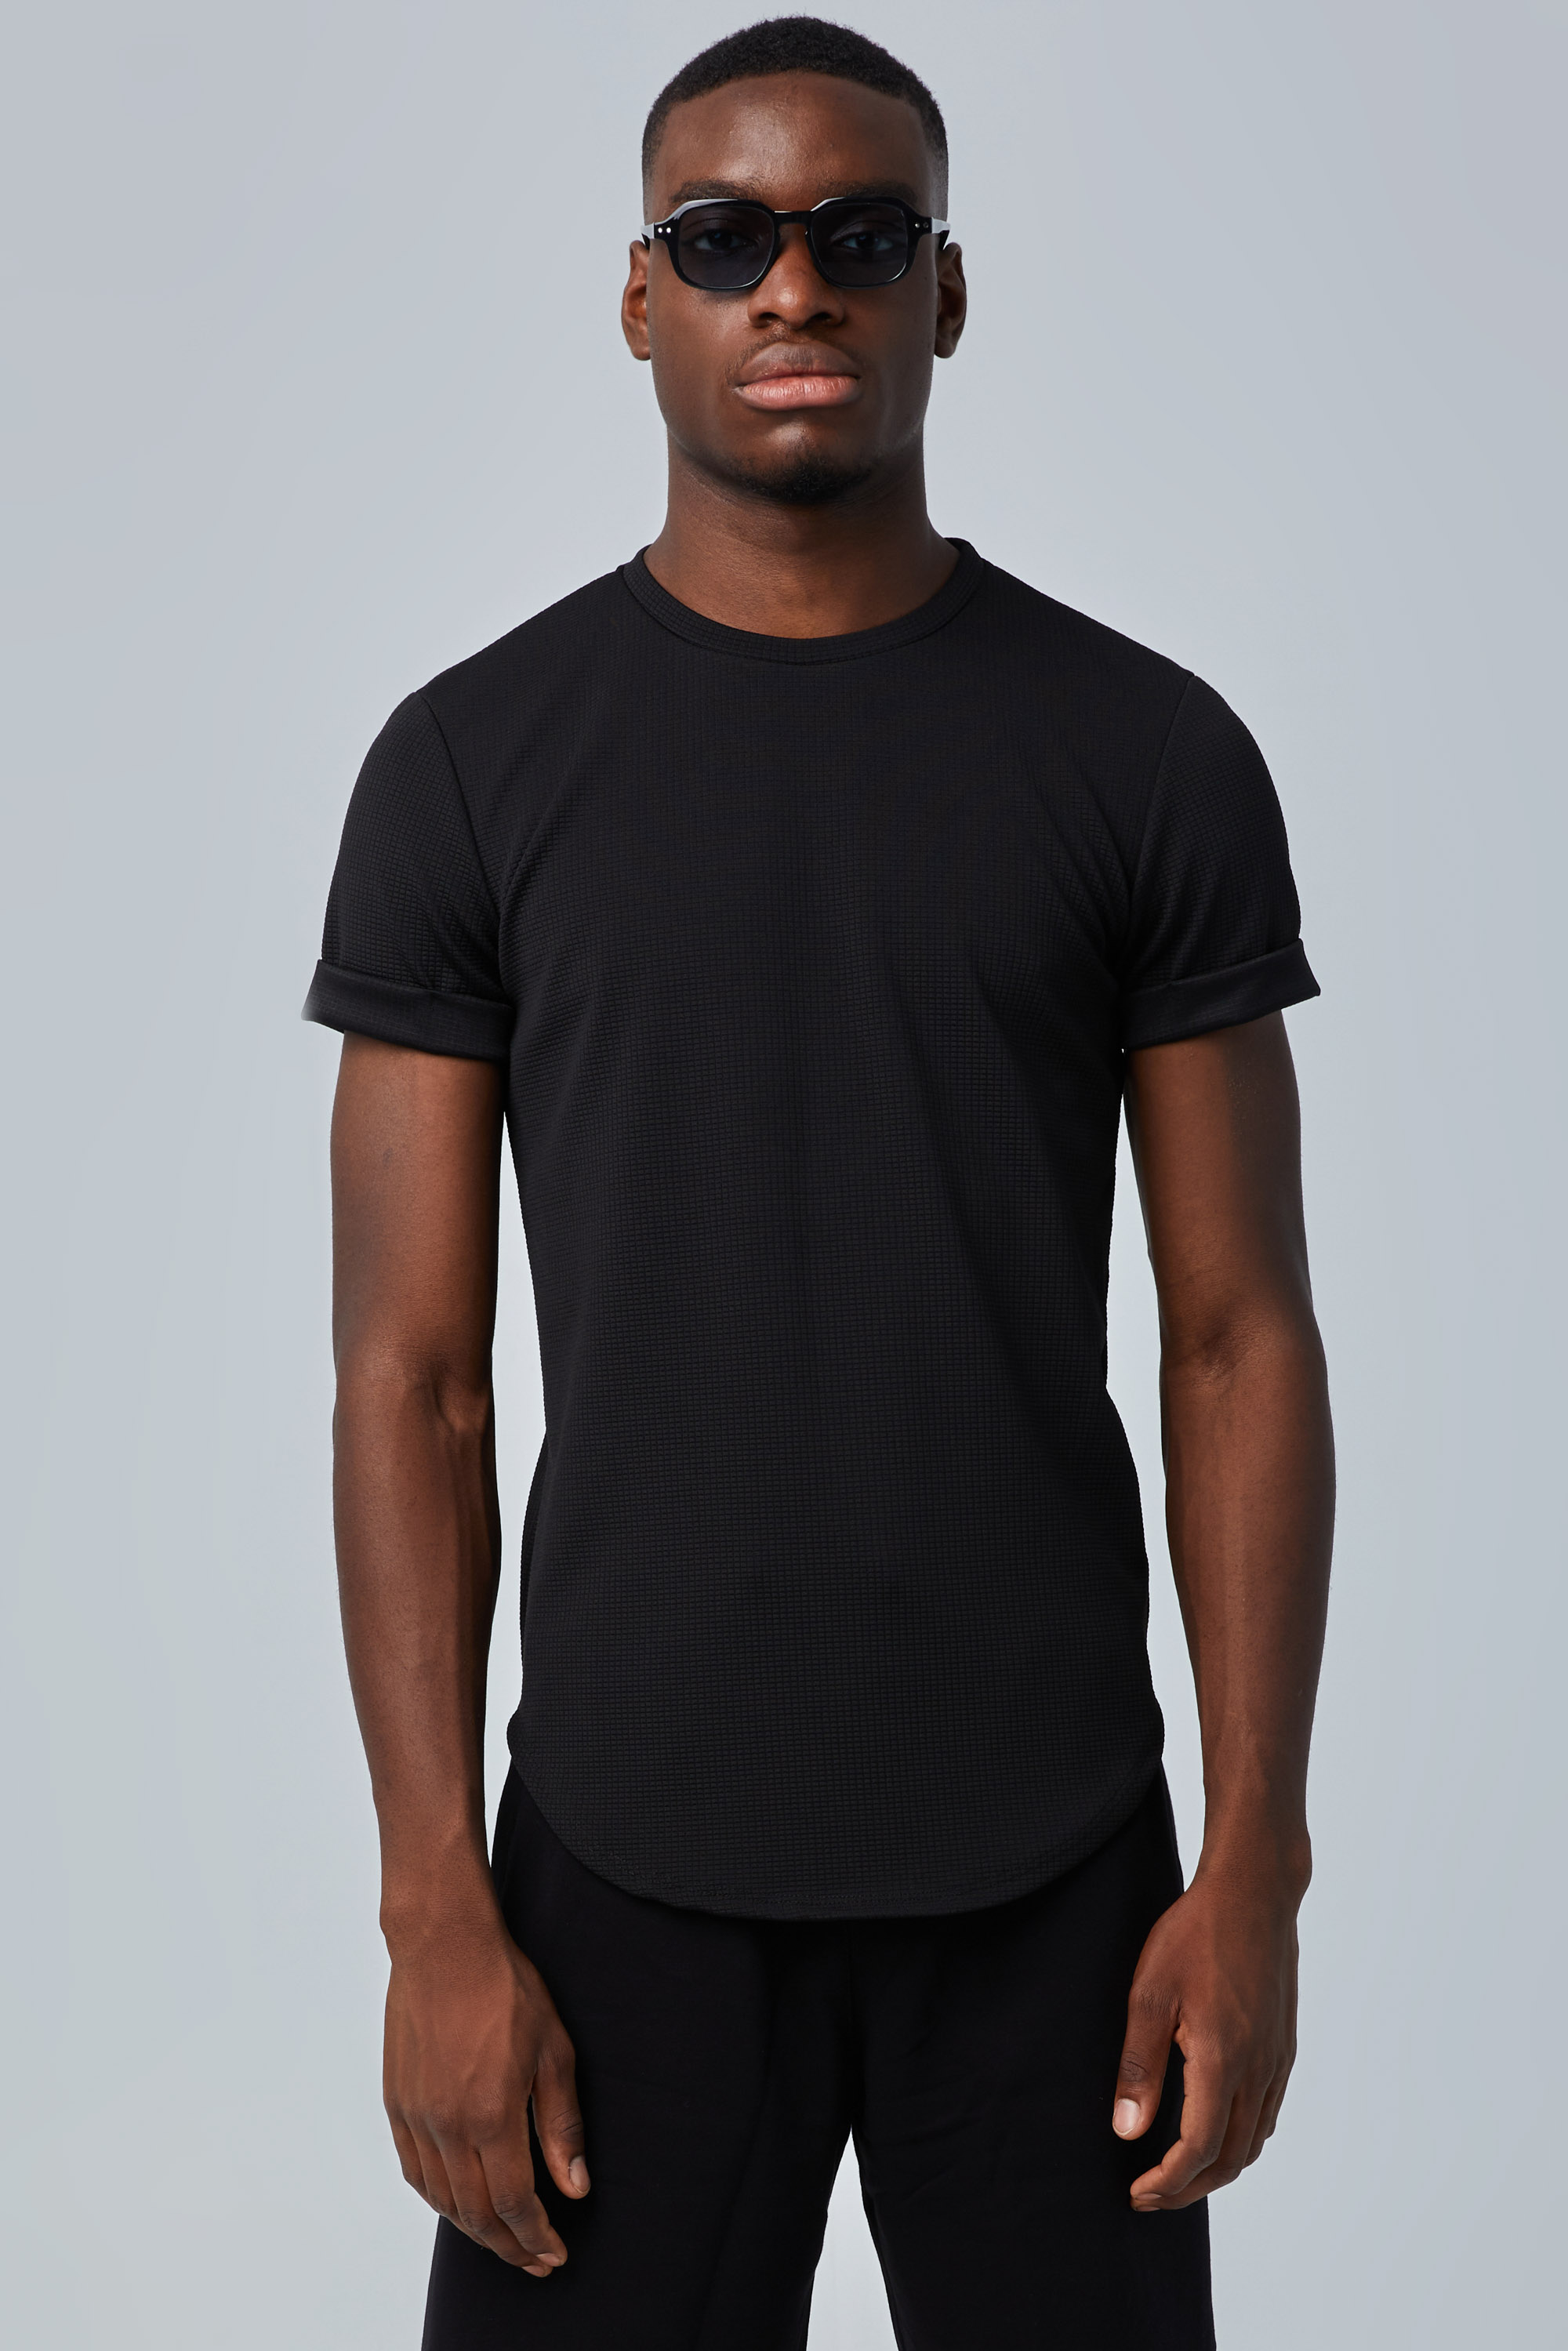 Textured Black T-Shirt With Rolled-Up Sleeves | Aristoteli Bitsiani